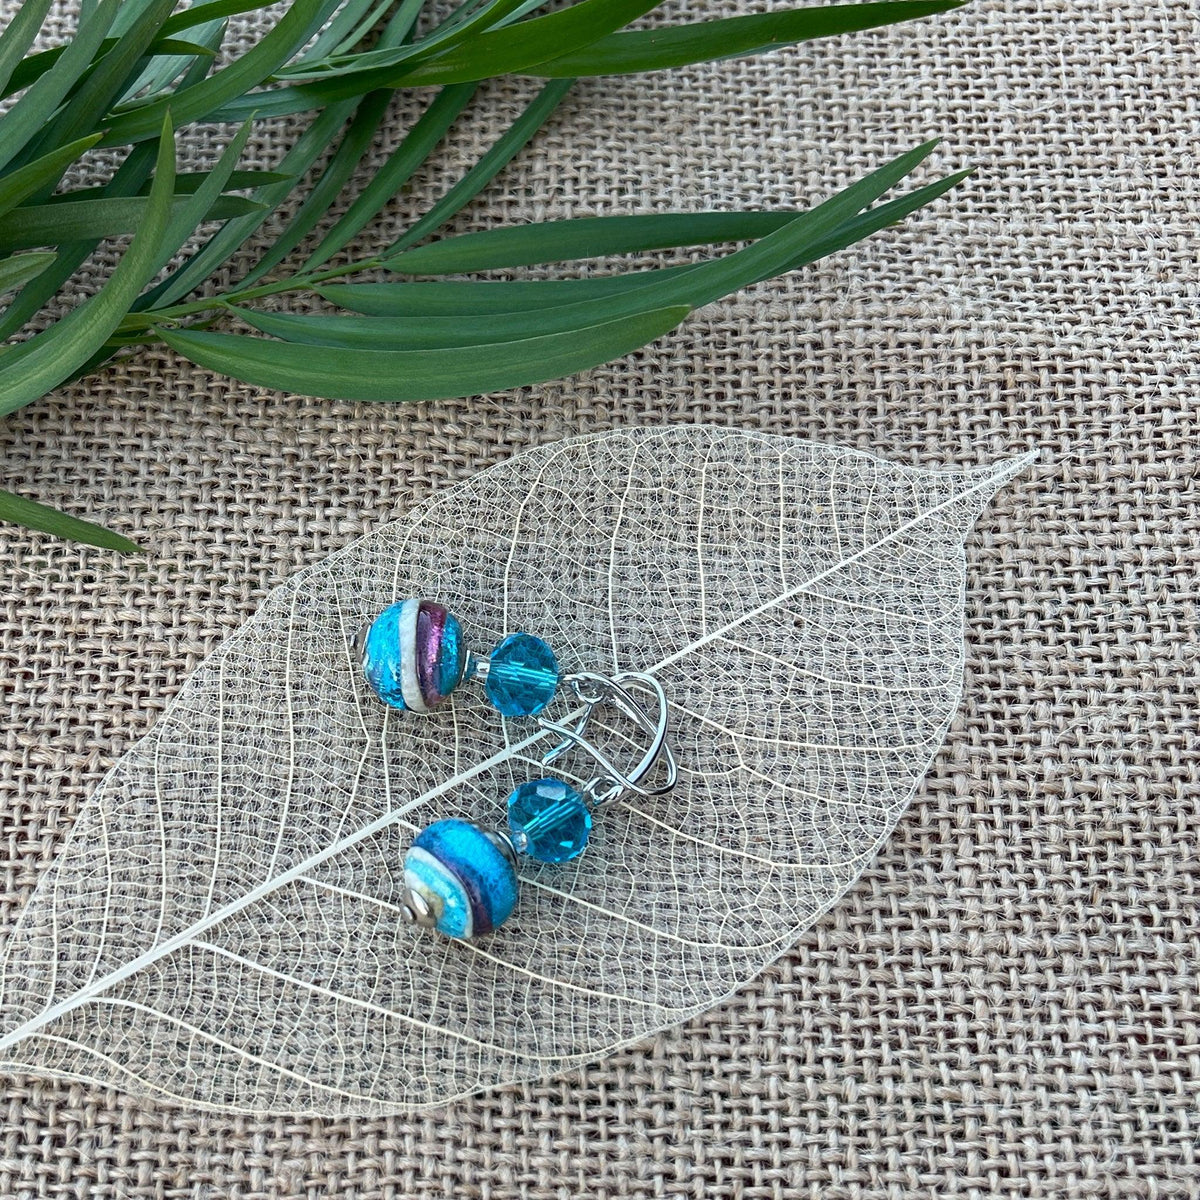 Rialto Murano Glass Bead Earrings, Made in Italy, Choice of Color - MyItalianDecor